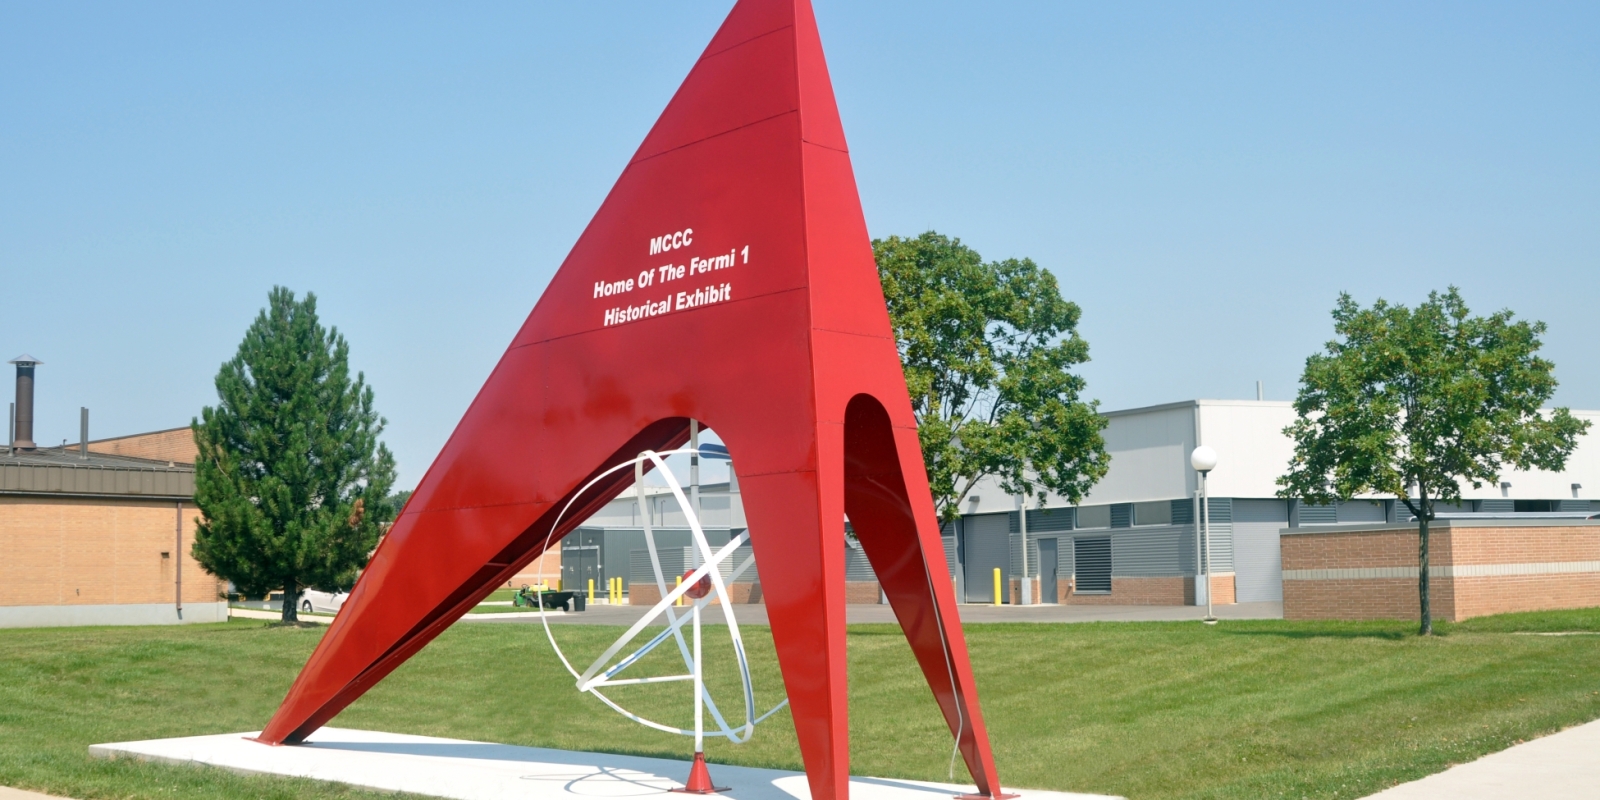 MCCC Fermi Sculpture on Campus